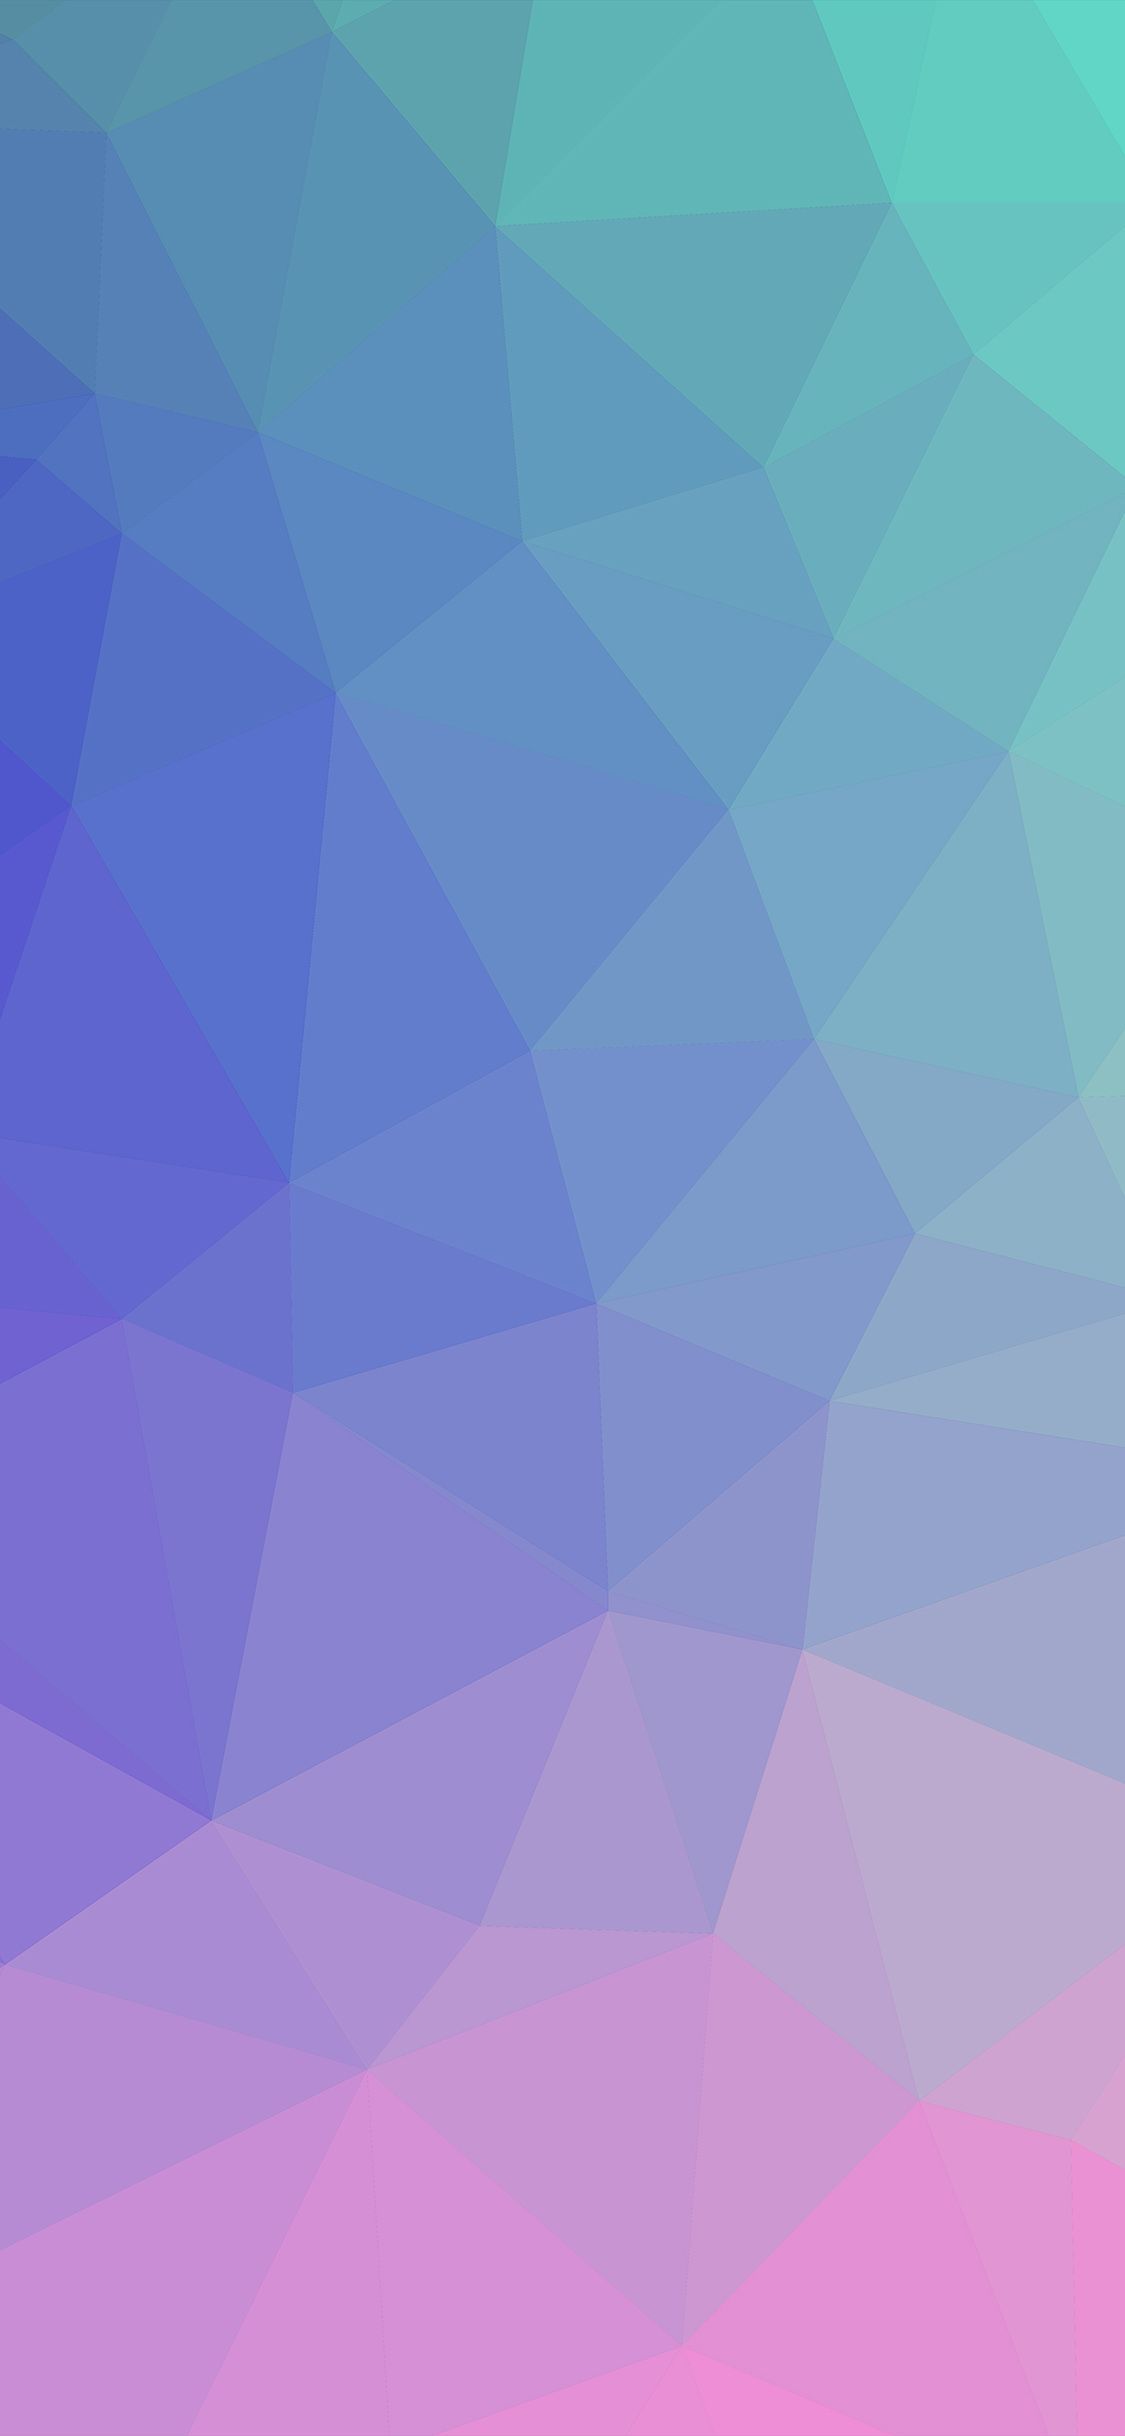 iPhone wallpaper. samsung galaxy polyart pastel blue violet pattern